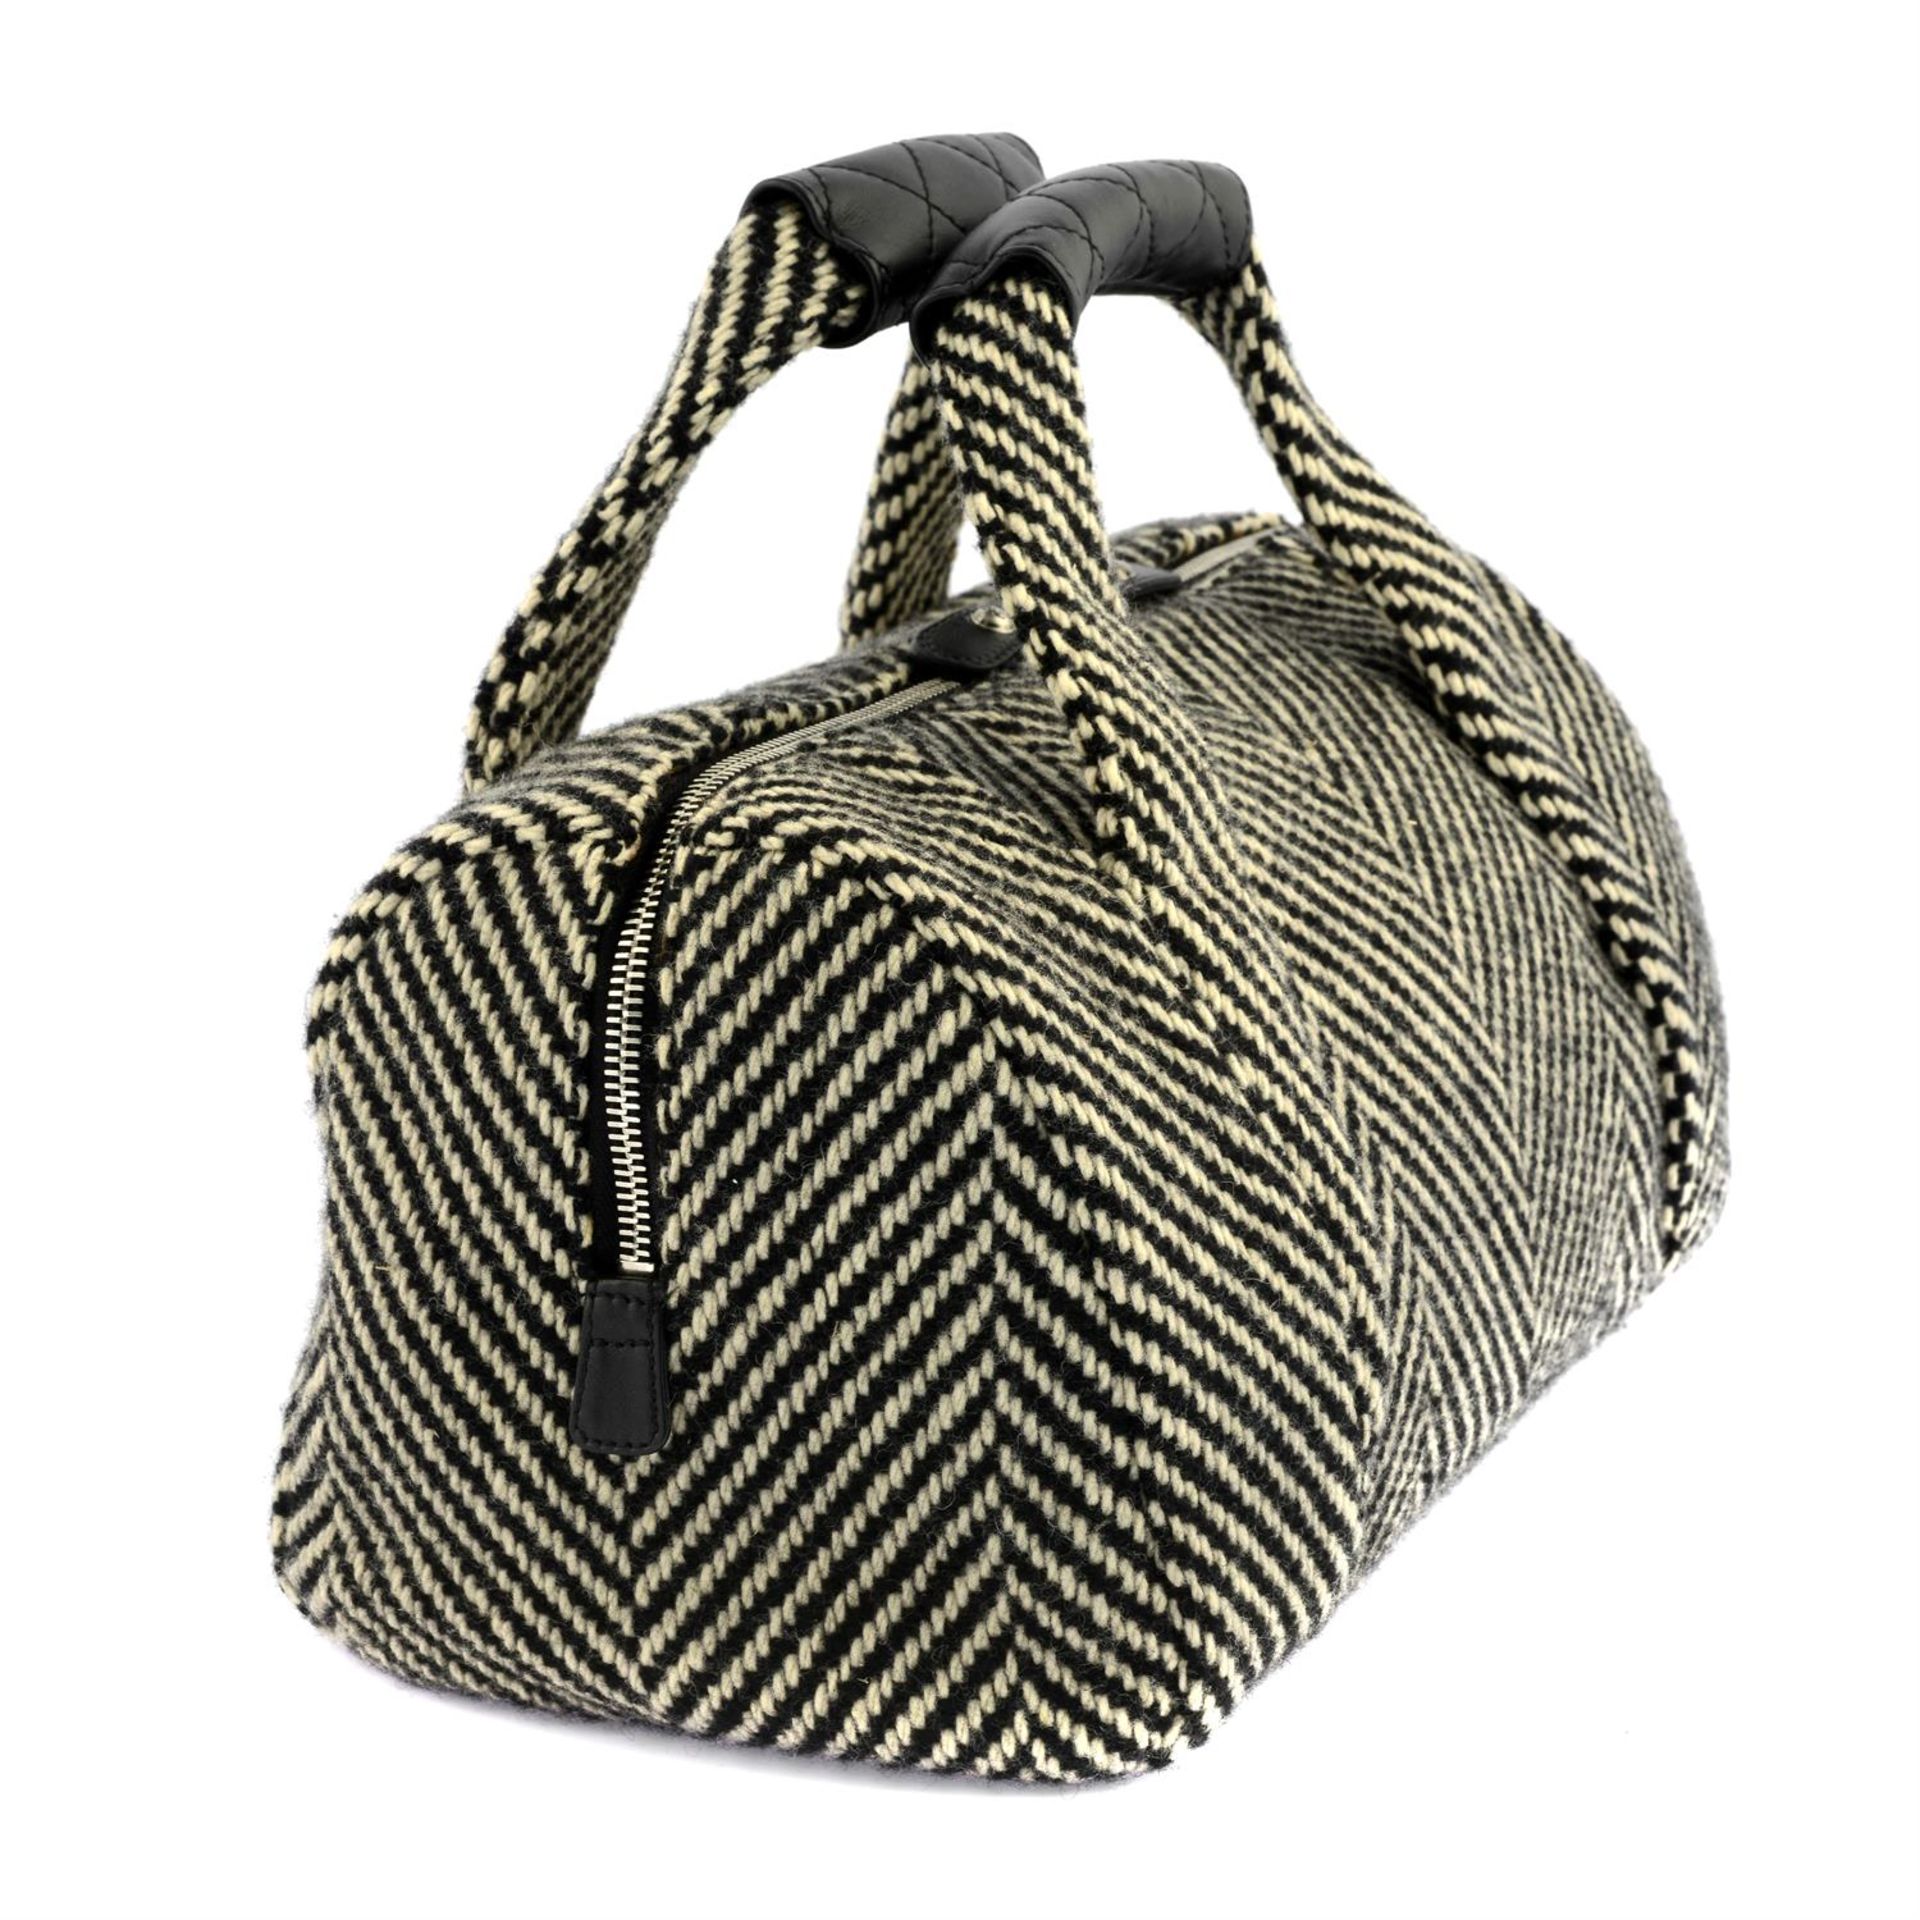 CHANEL - a chevron woven fabric handbag. - Image 3 of 5